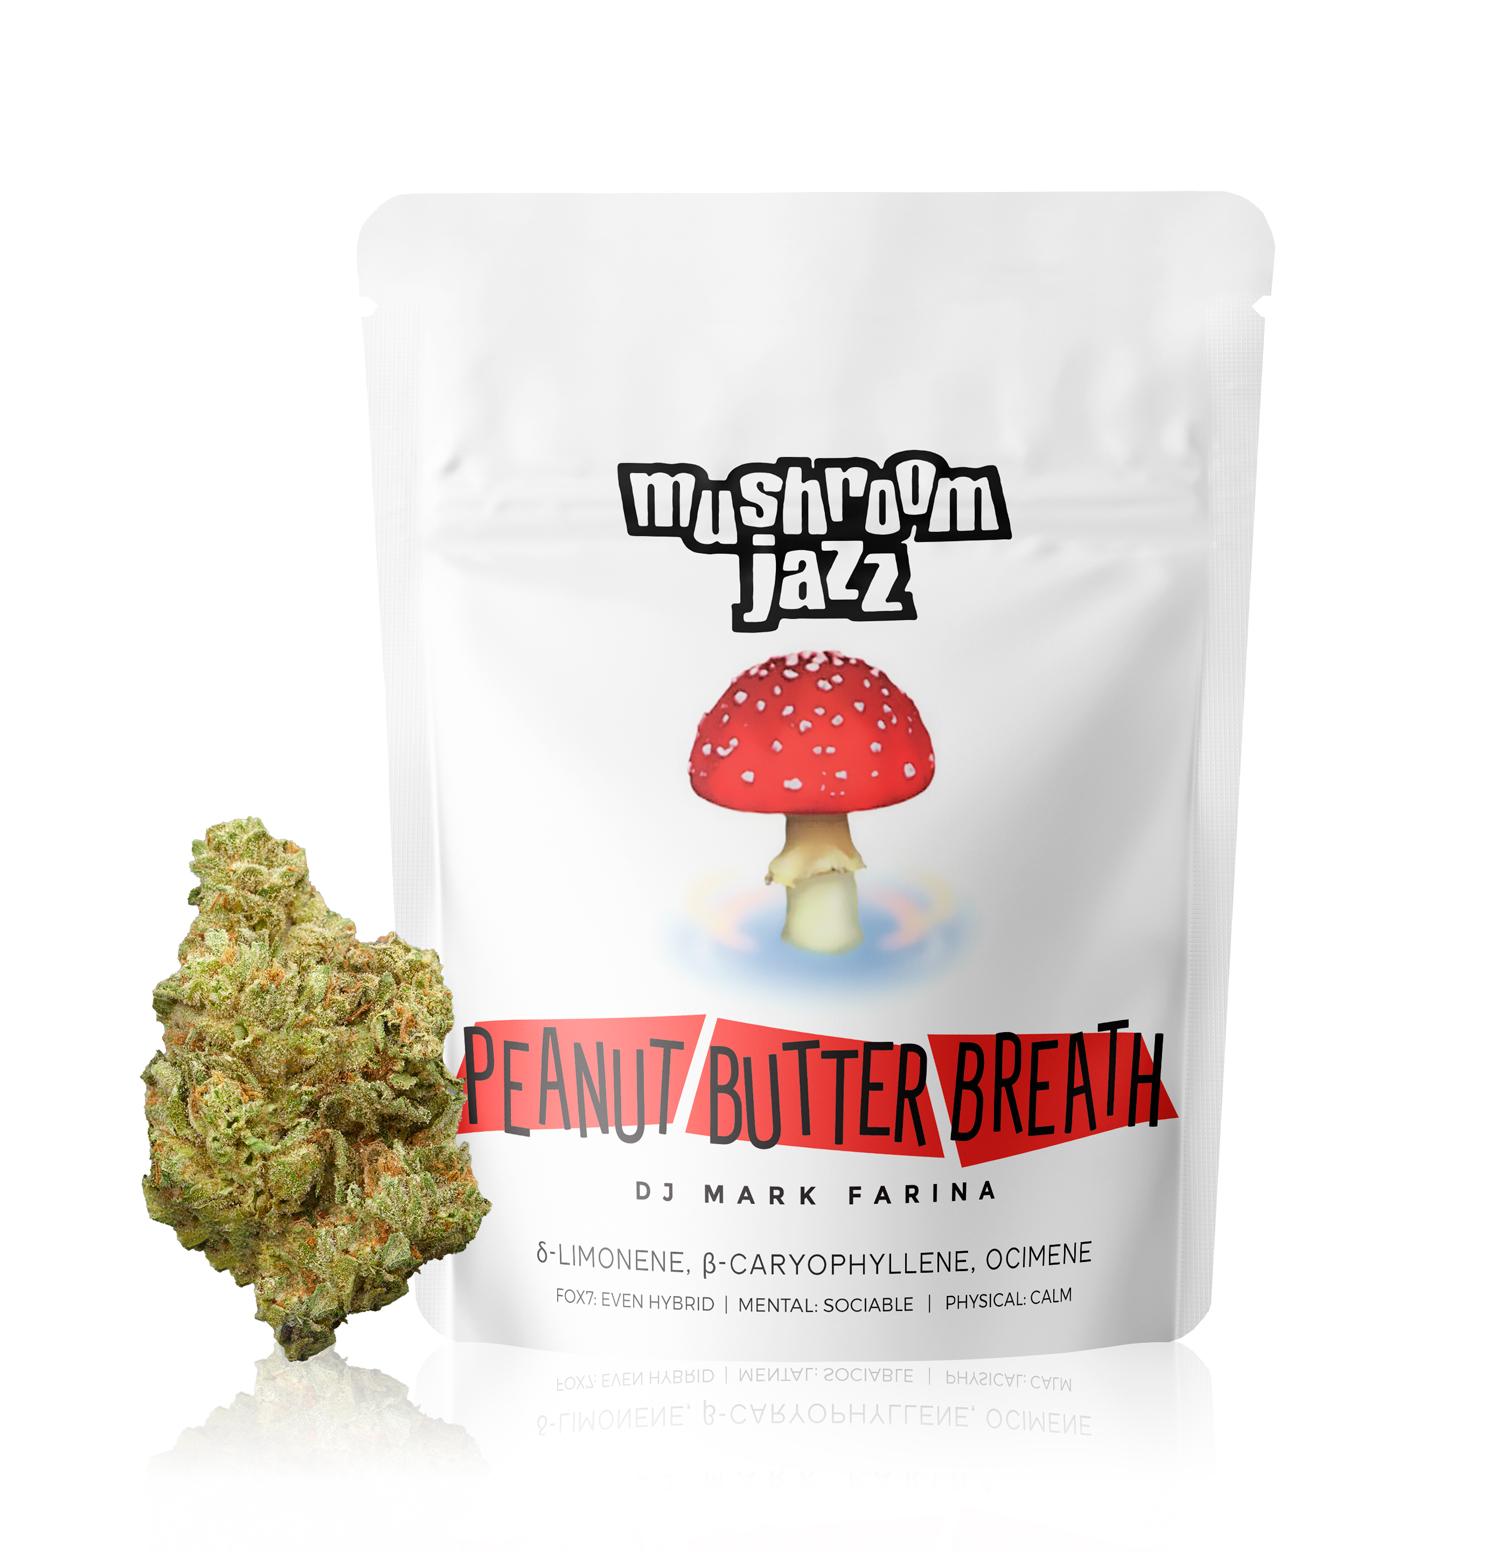 DJ Mark Farina • Even Hybrid Cannabis • Peanut Butter Breath